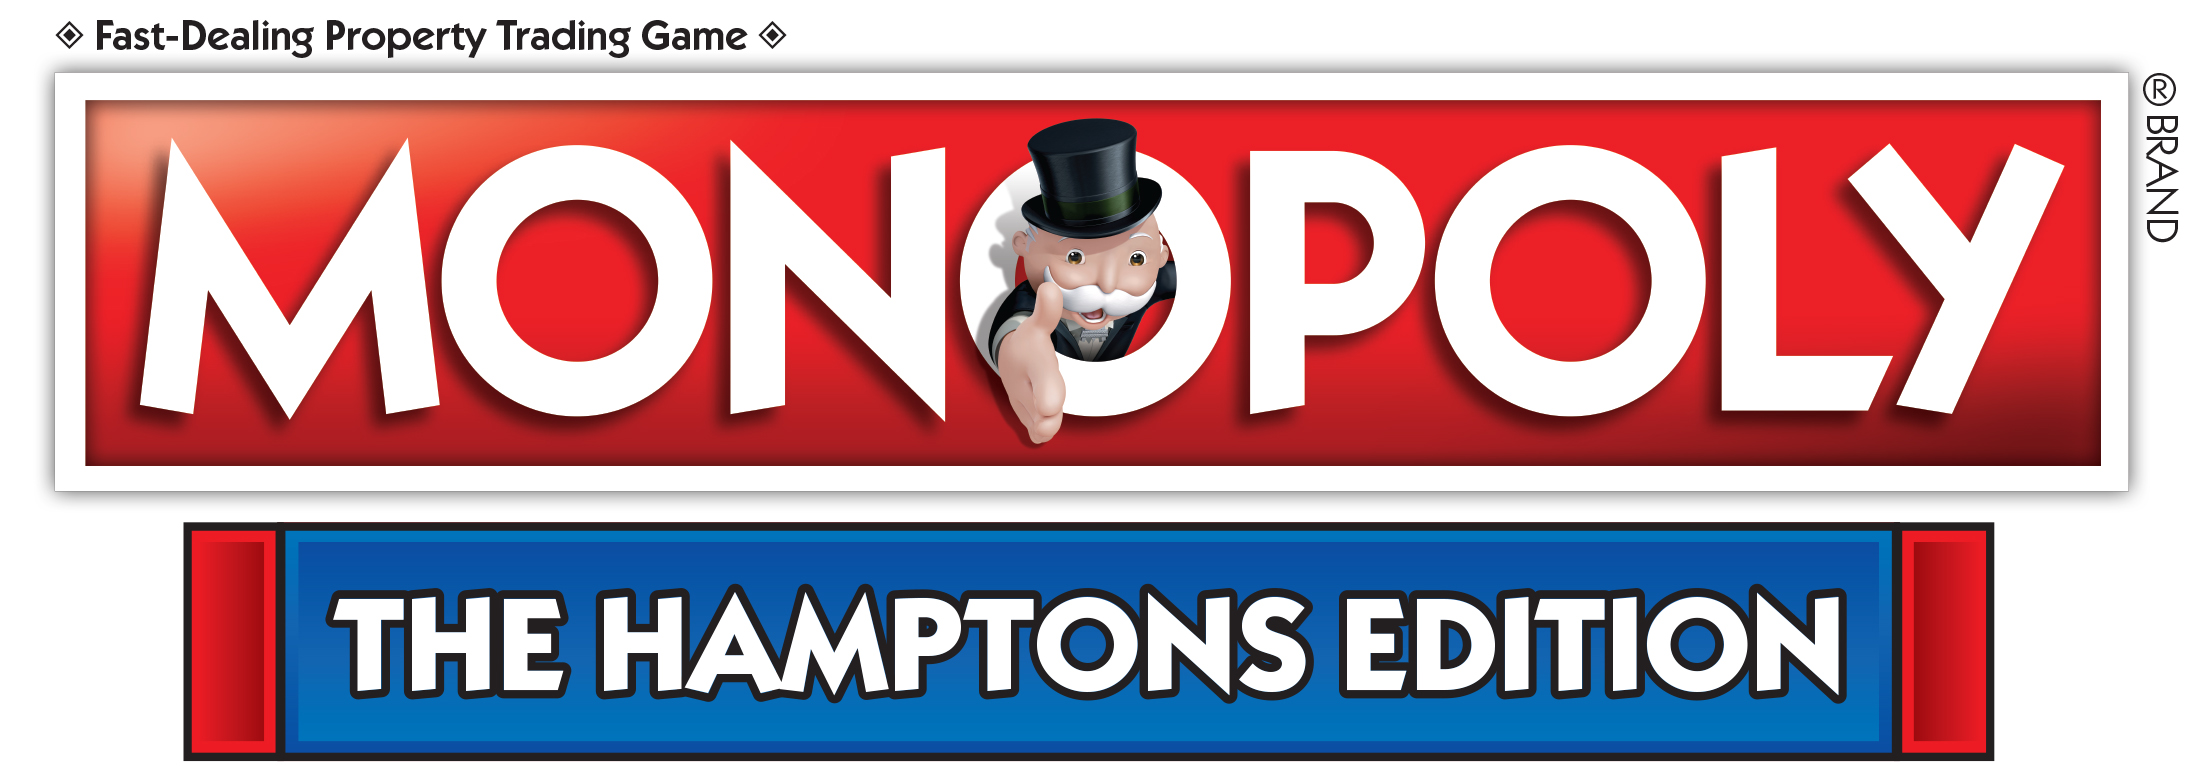 Monopoly The Hamptons Edition logo